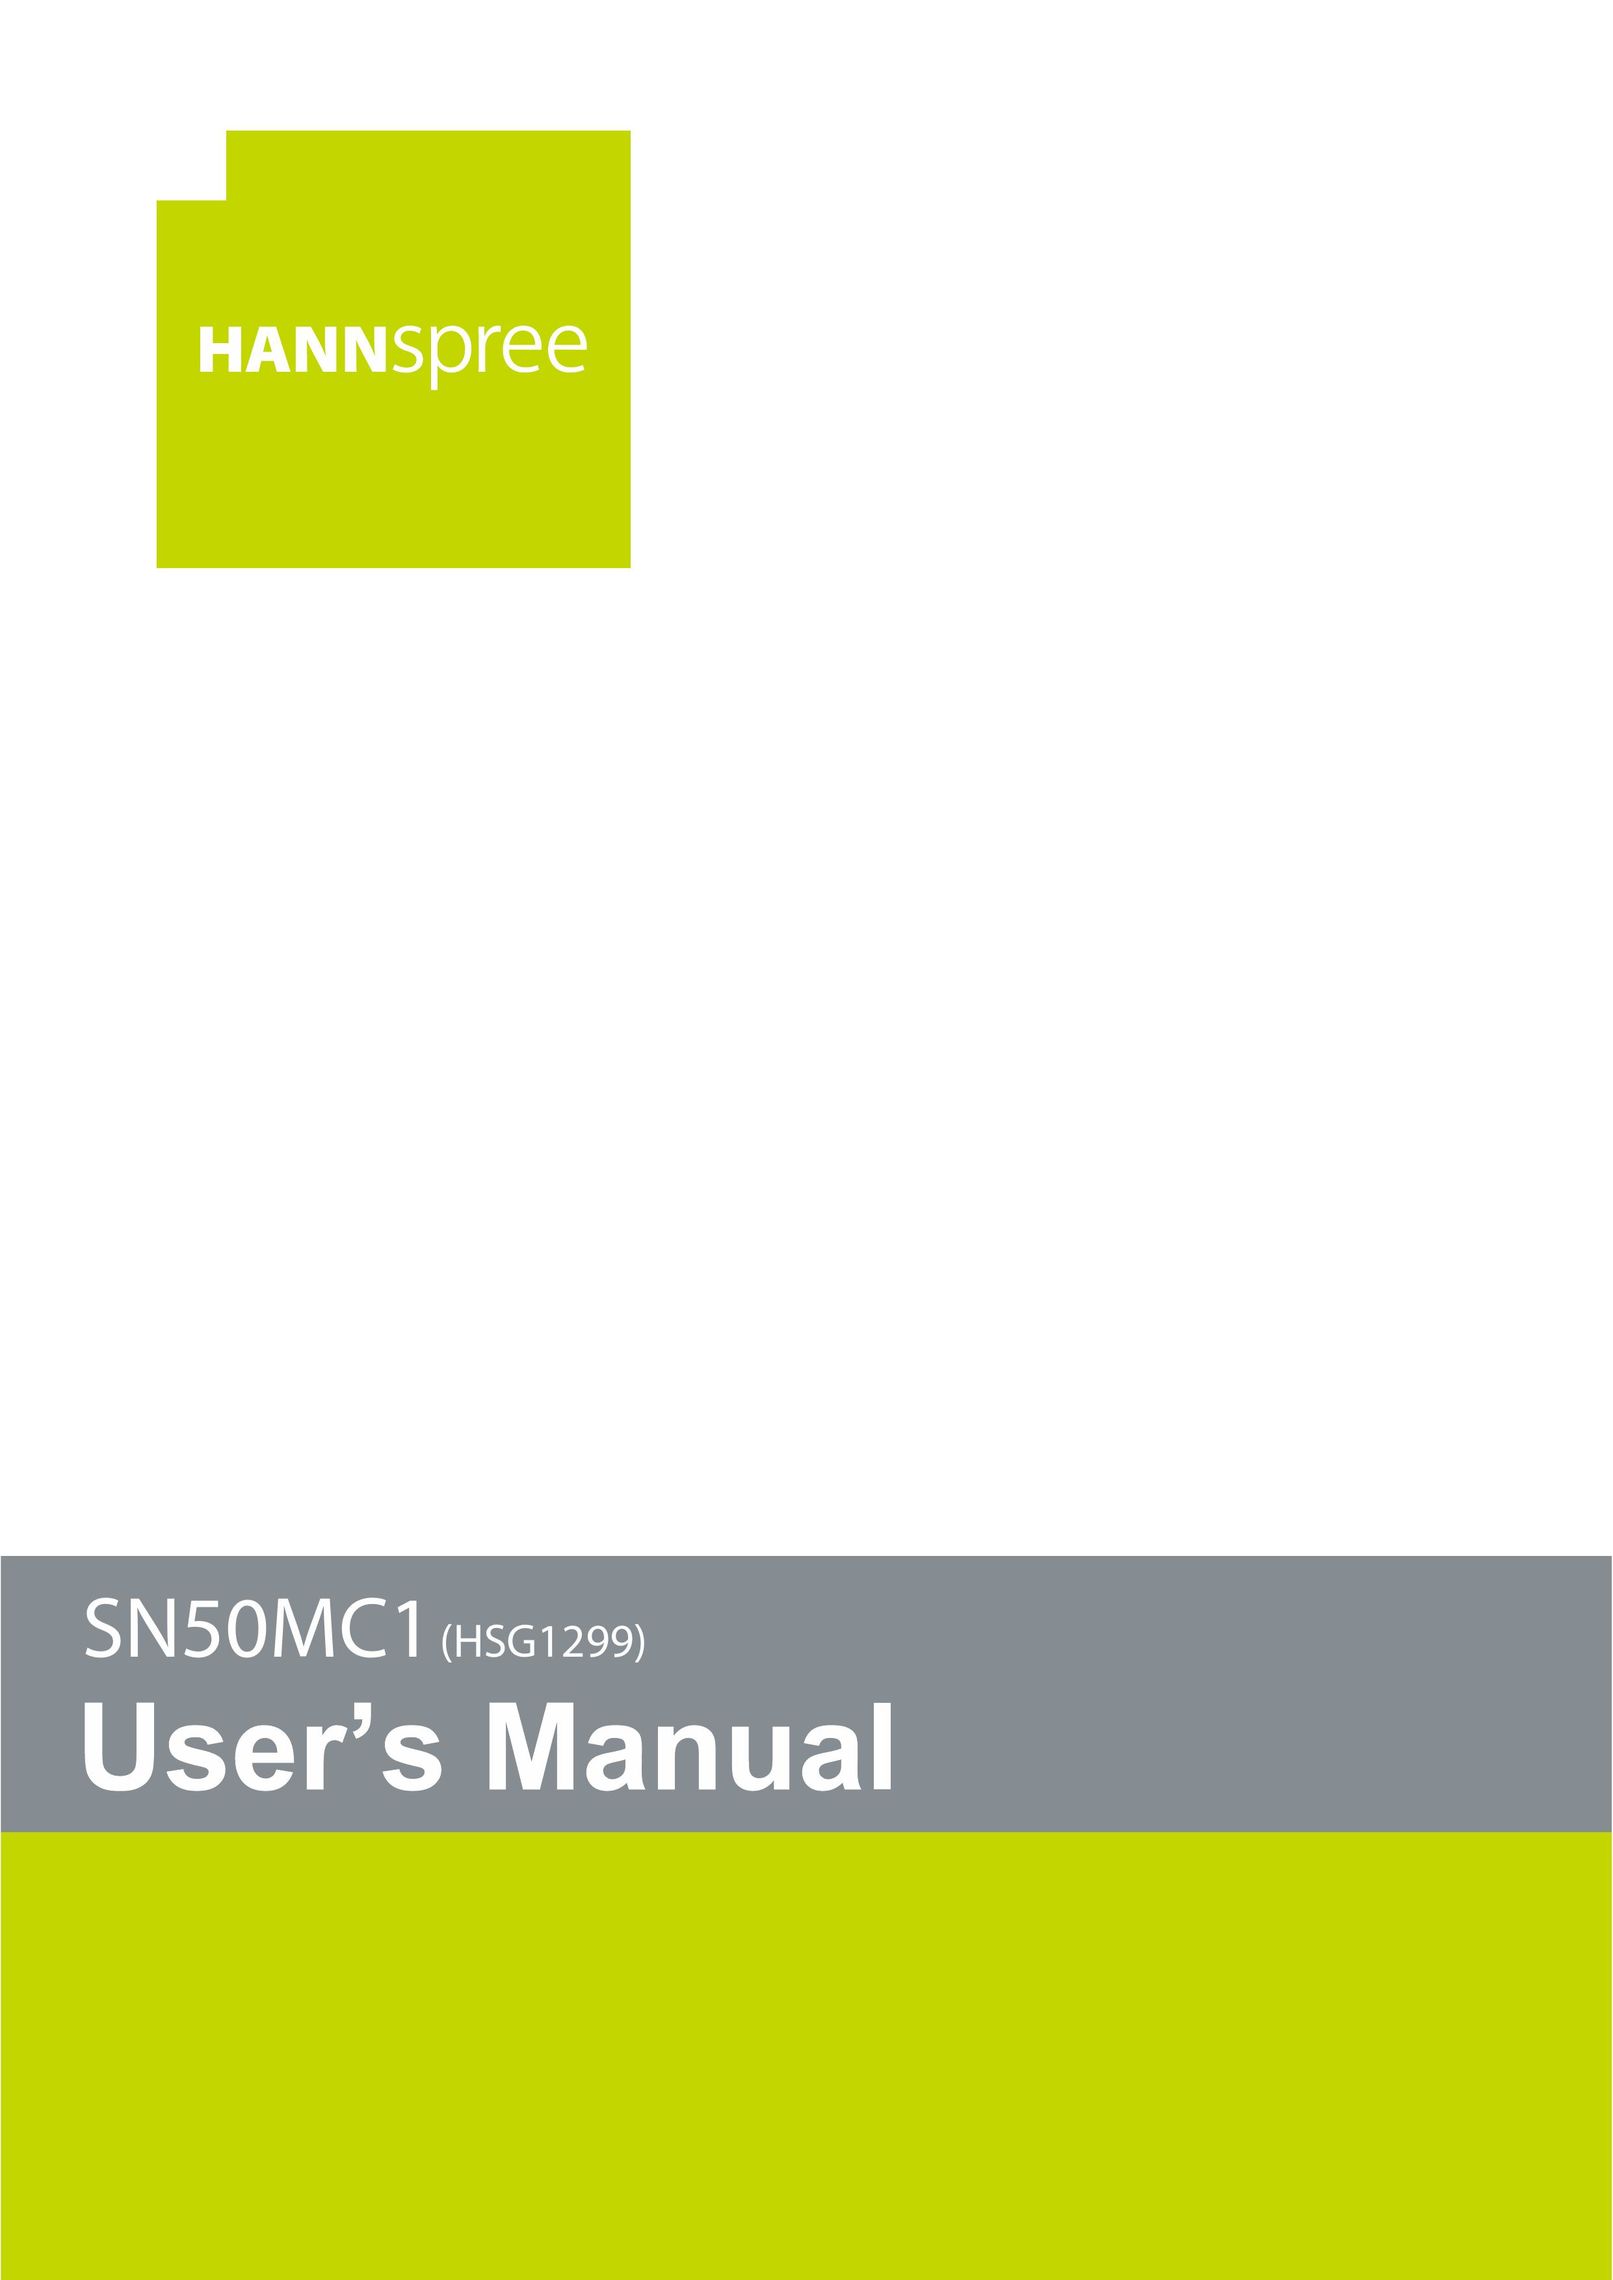 HANNspree SN50MC1 Cell Phone User Manual